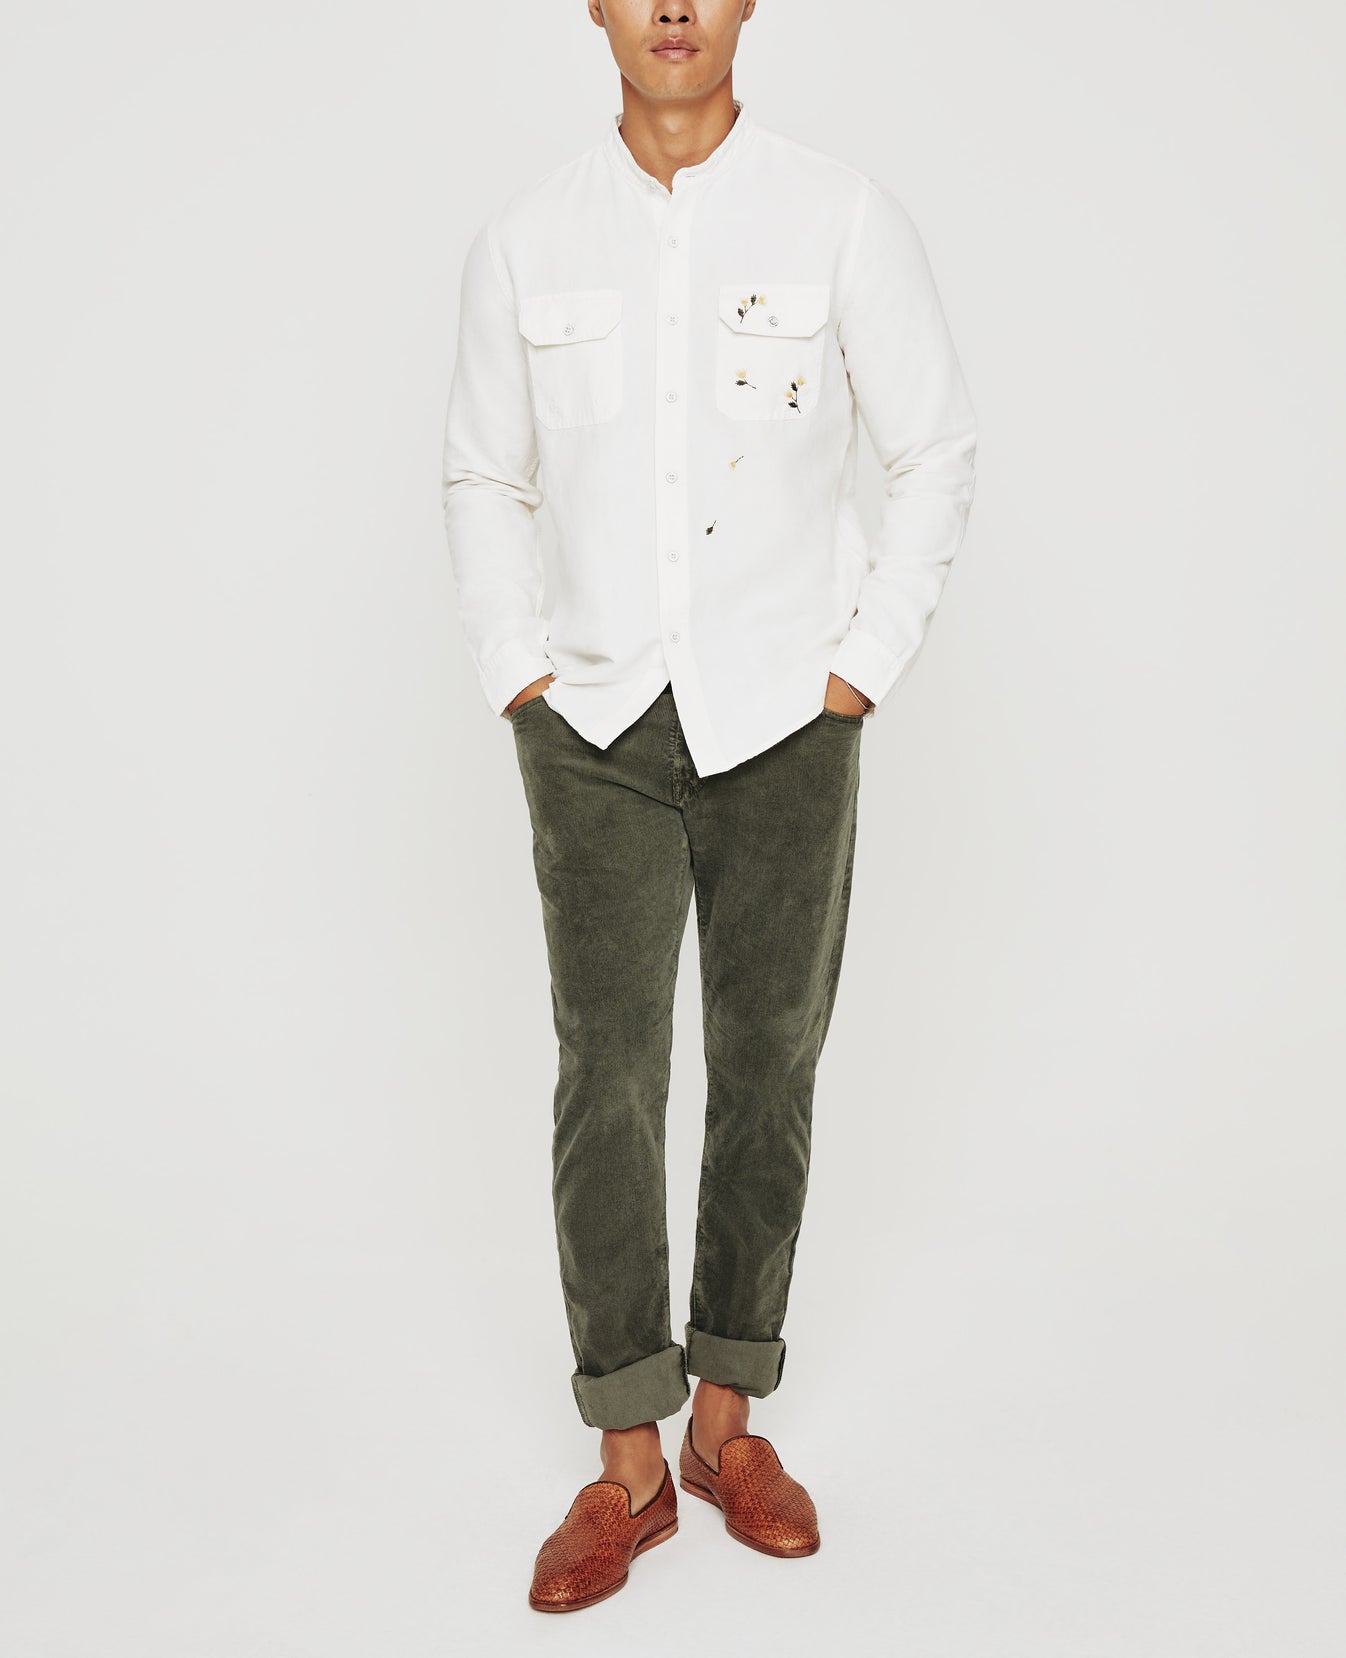 Benning Sleeve Patch Shirt Eb Super Bloom White Linen Mens Top Photo 3